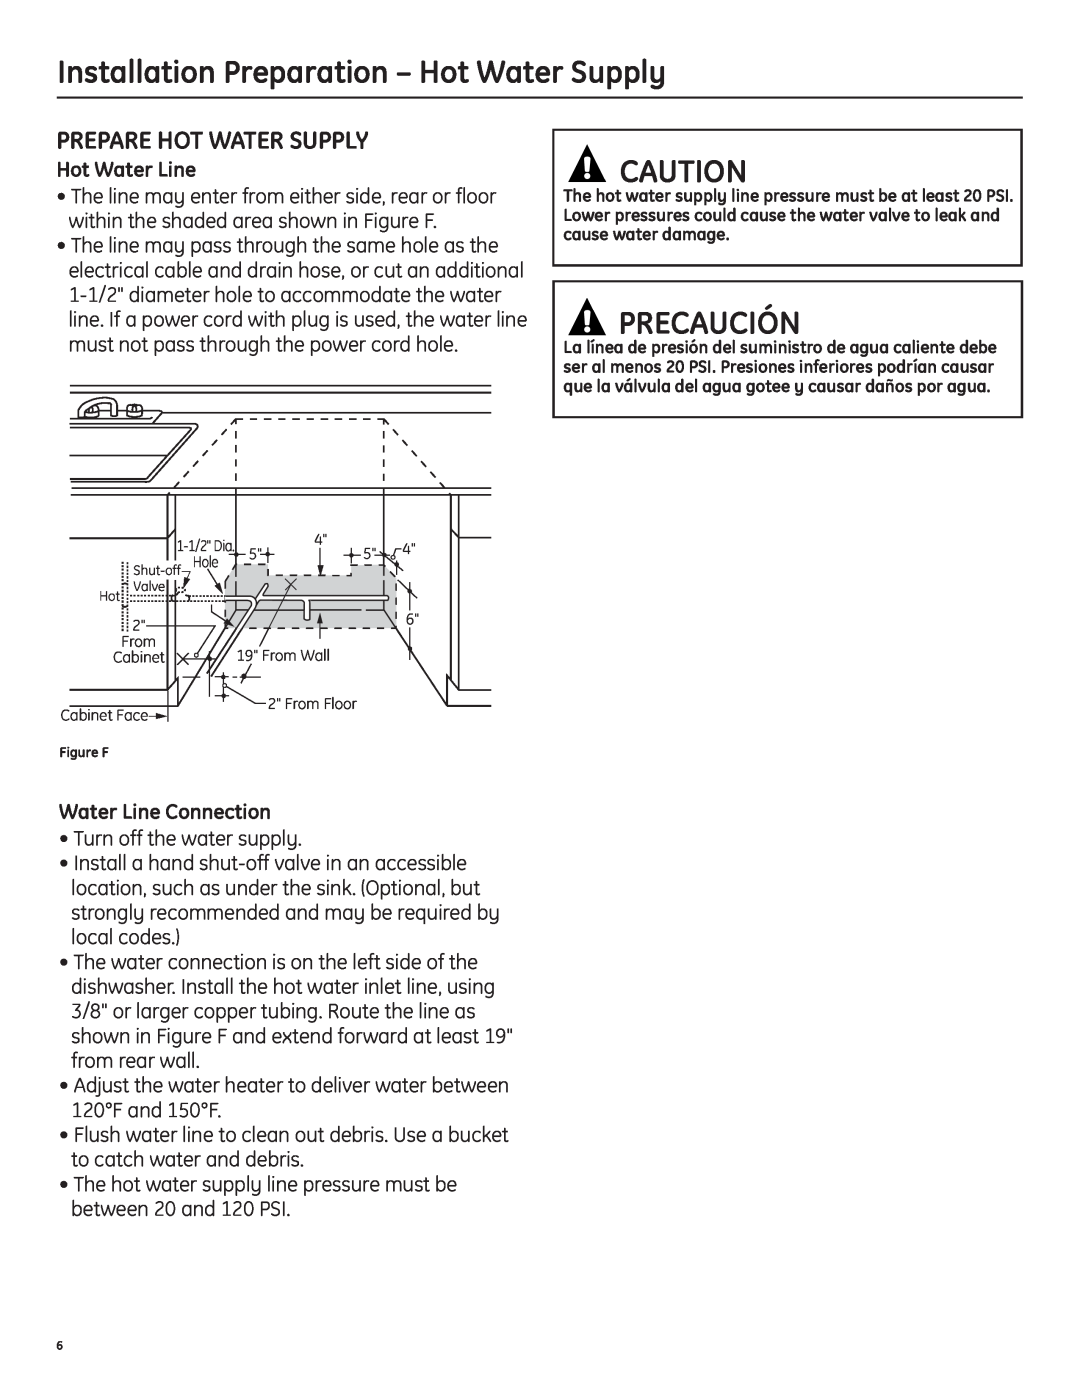 GE 206C1559P195 installation instructions Installation Preparation - Hot Water Supply, Prepare Hot Water Supply, Precaución 